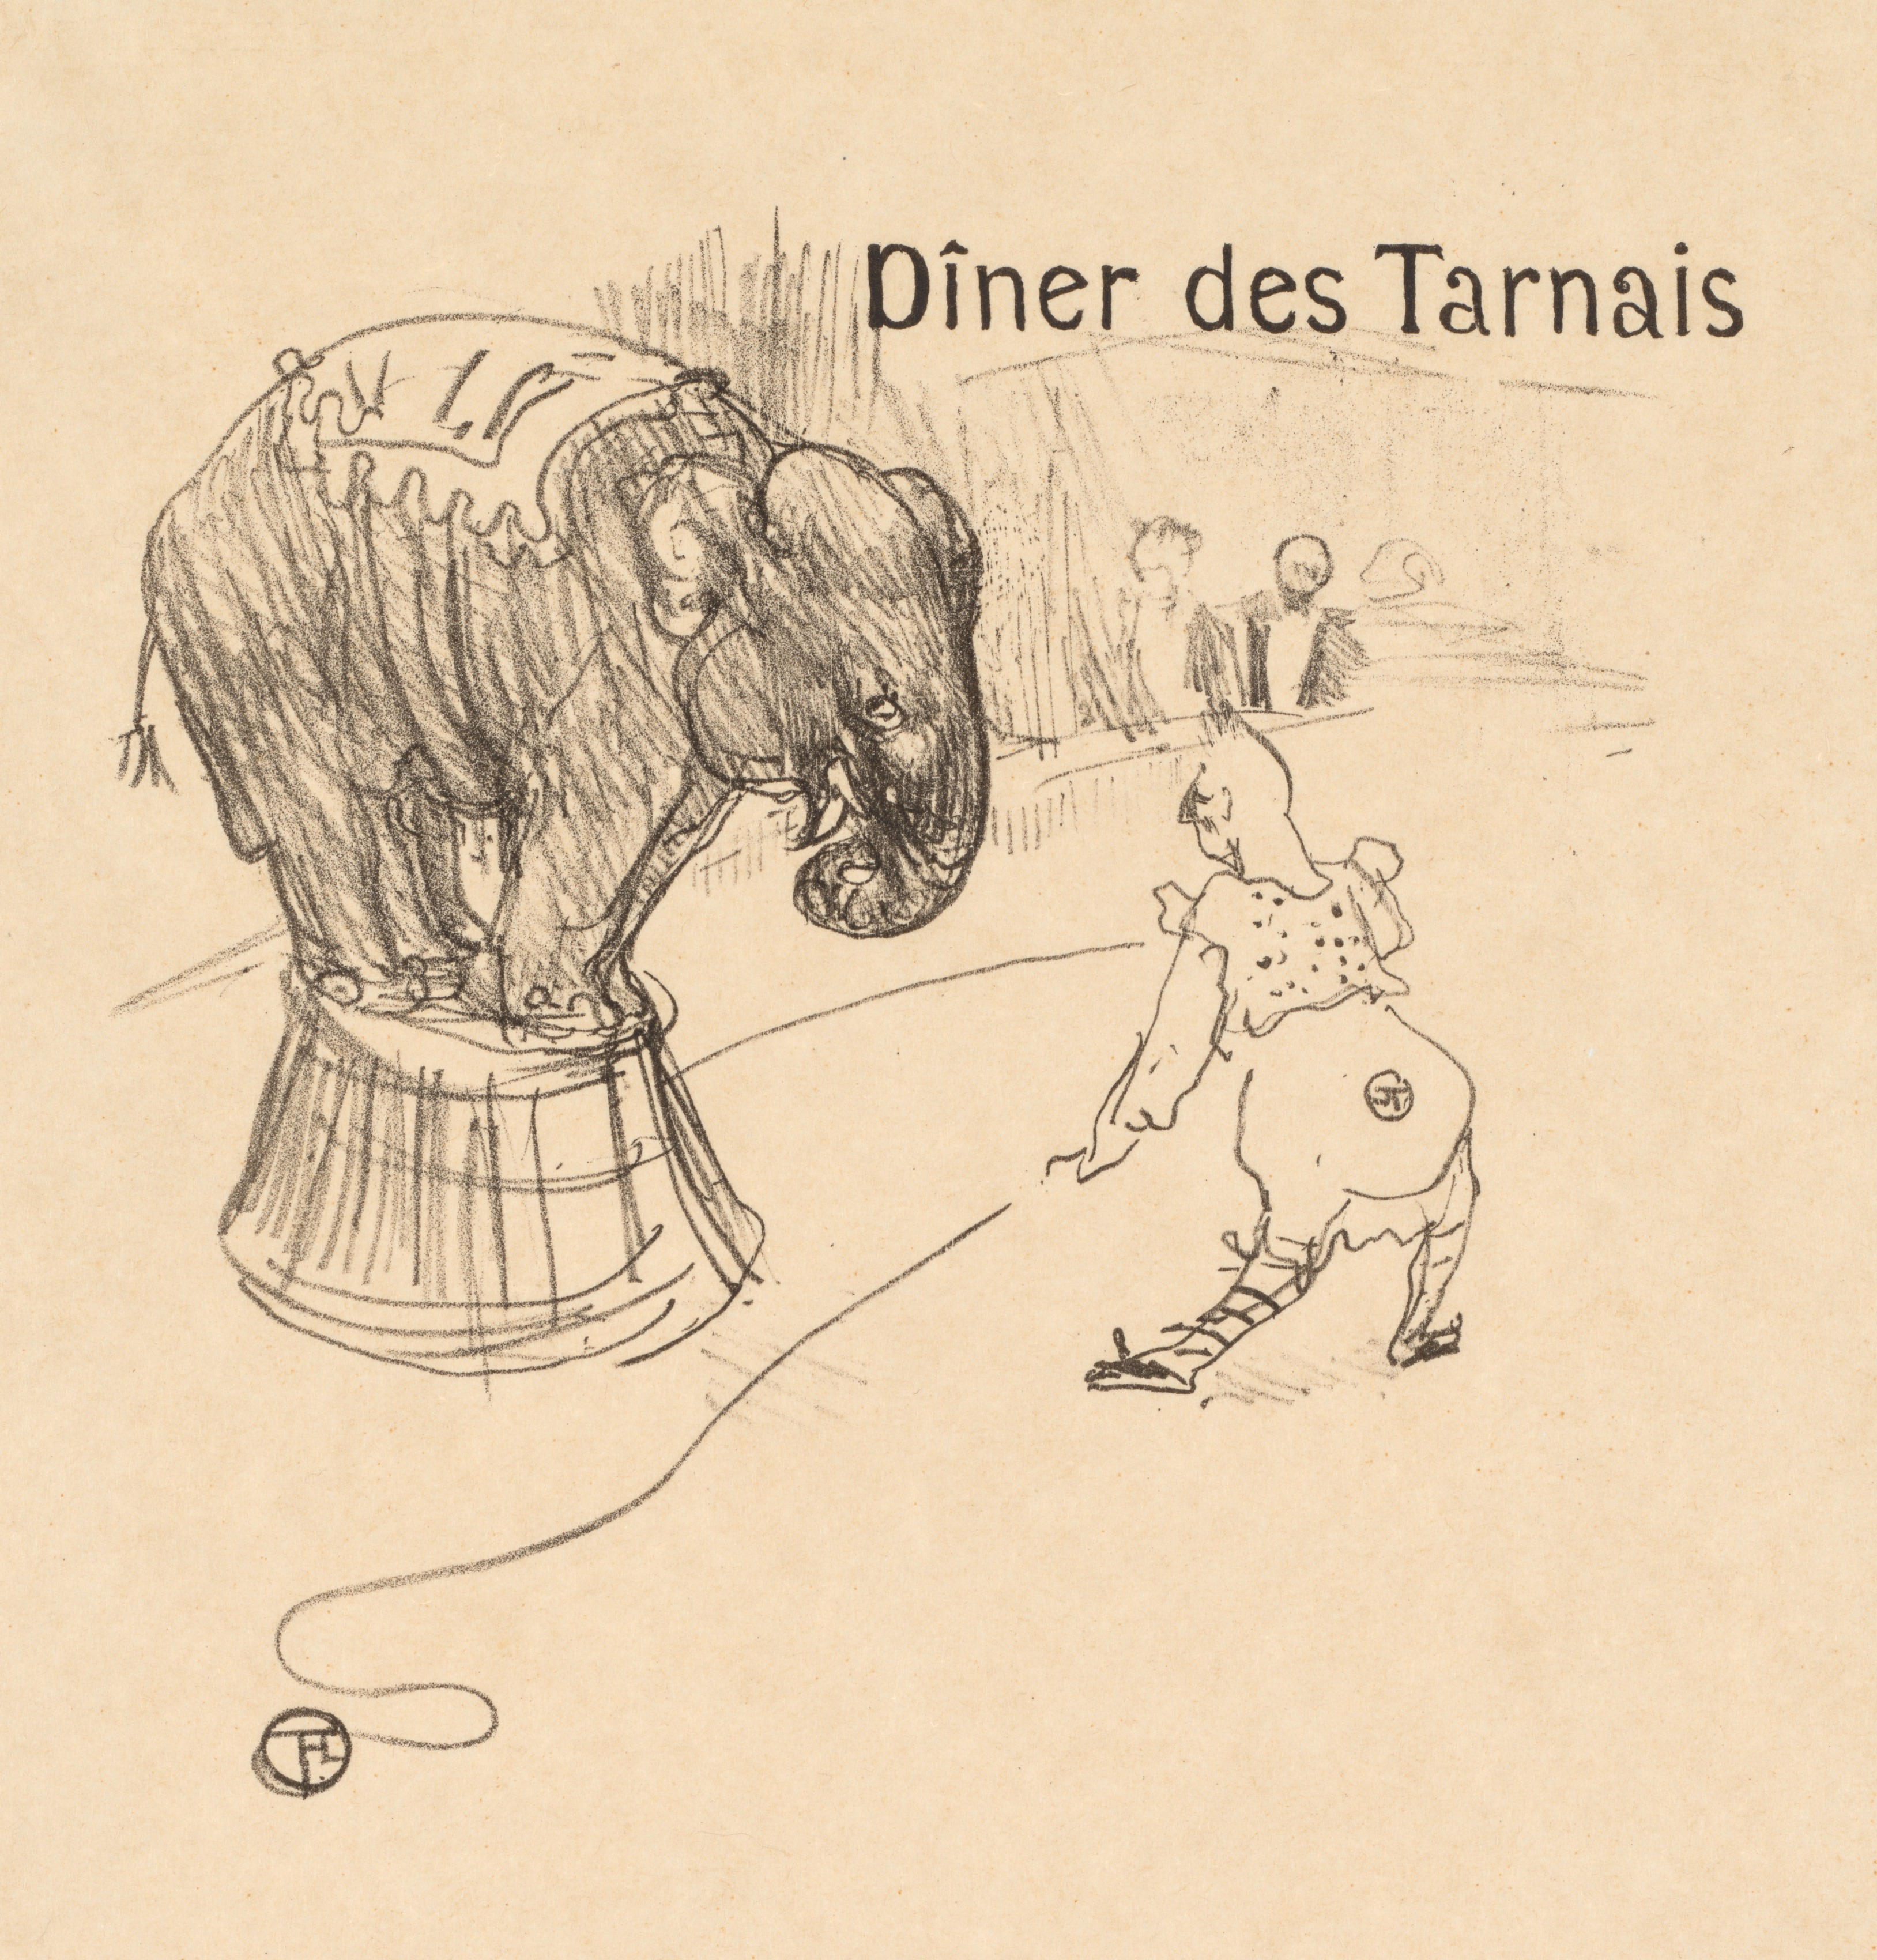 Menu from the Dinner Tarnais (Dîner des Tarnais)